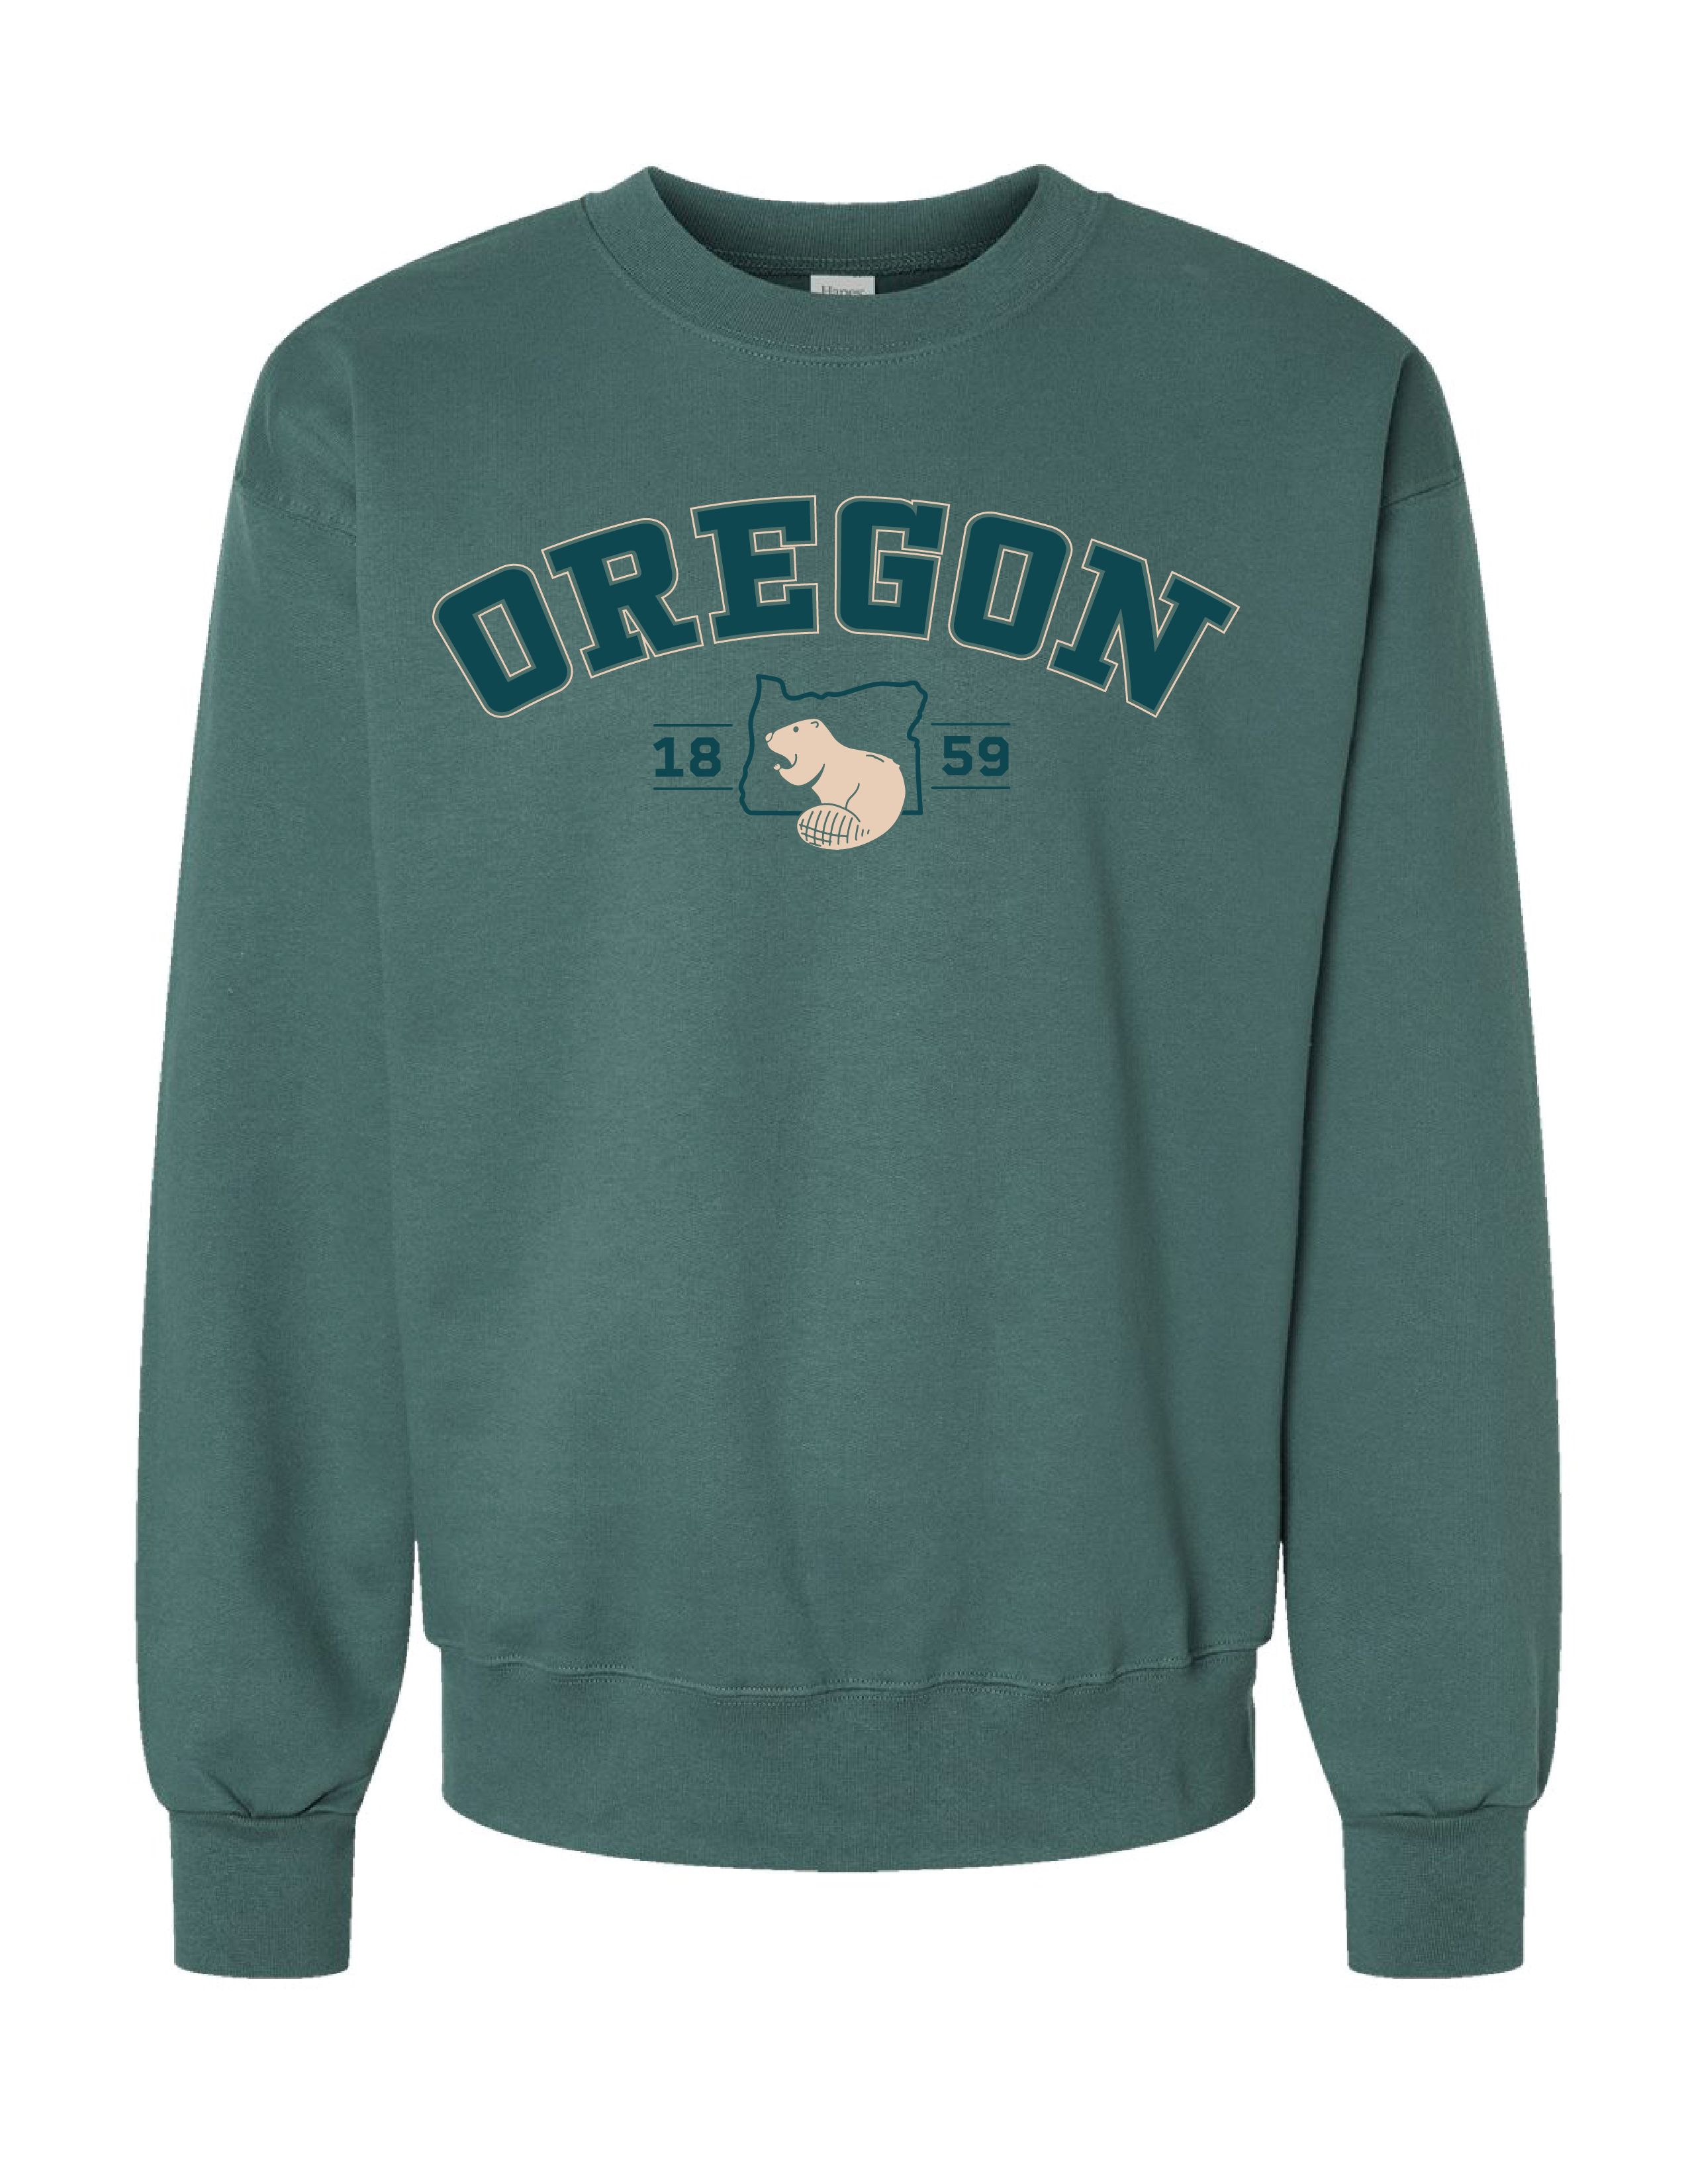 PNW Oregon Varsity Sweatshirt